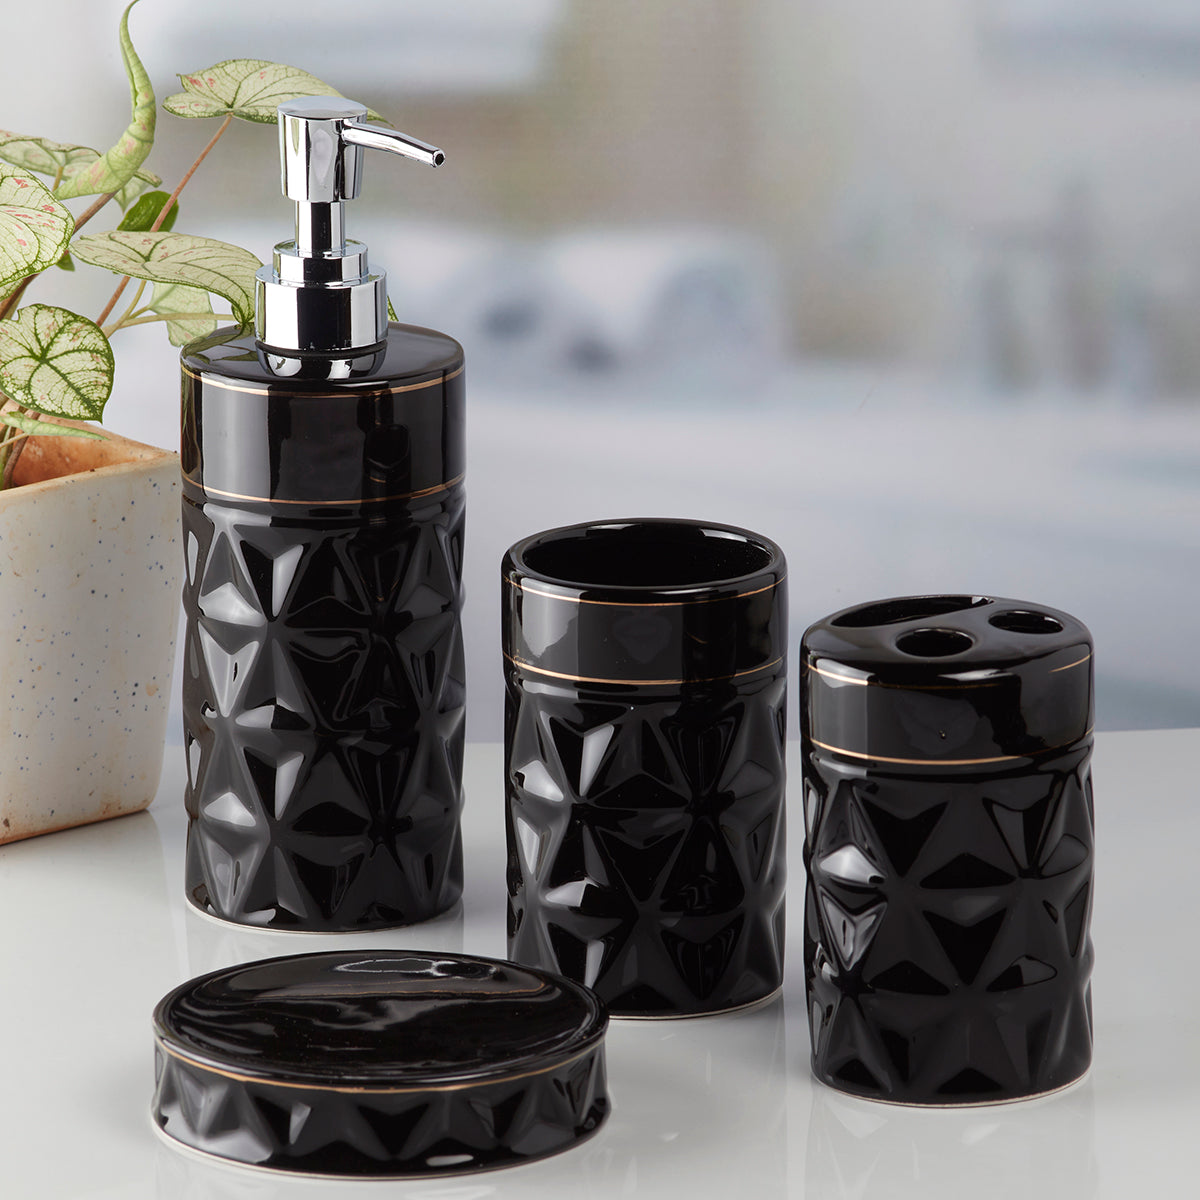 Ceramic Bathroom Accessories Set of 4 Bath Set with Soap Dispenser (9847)